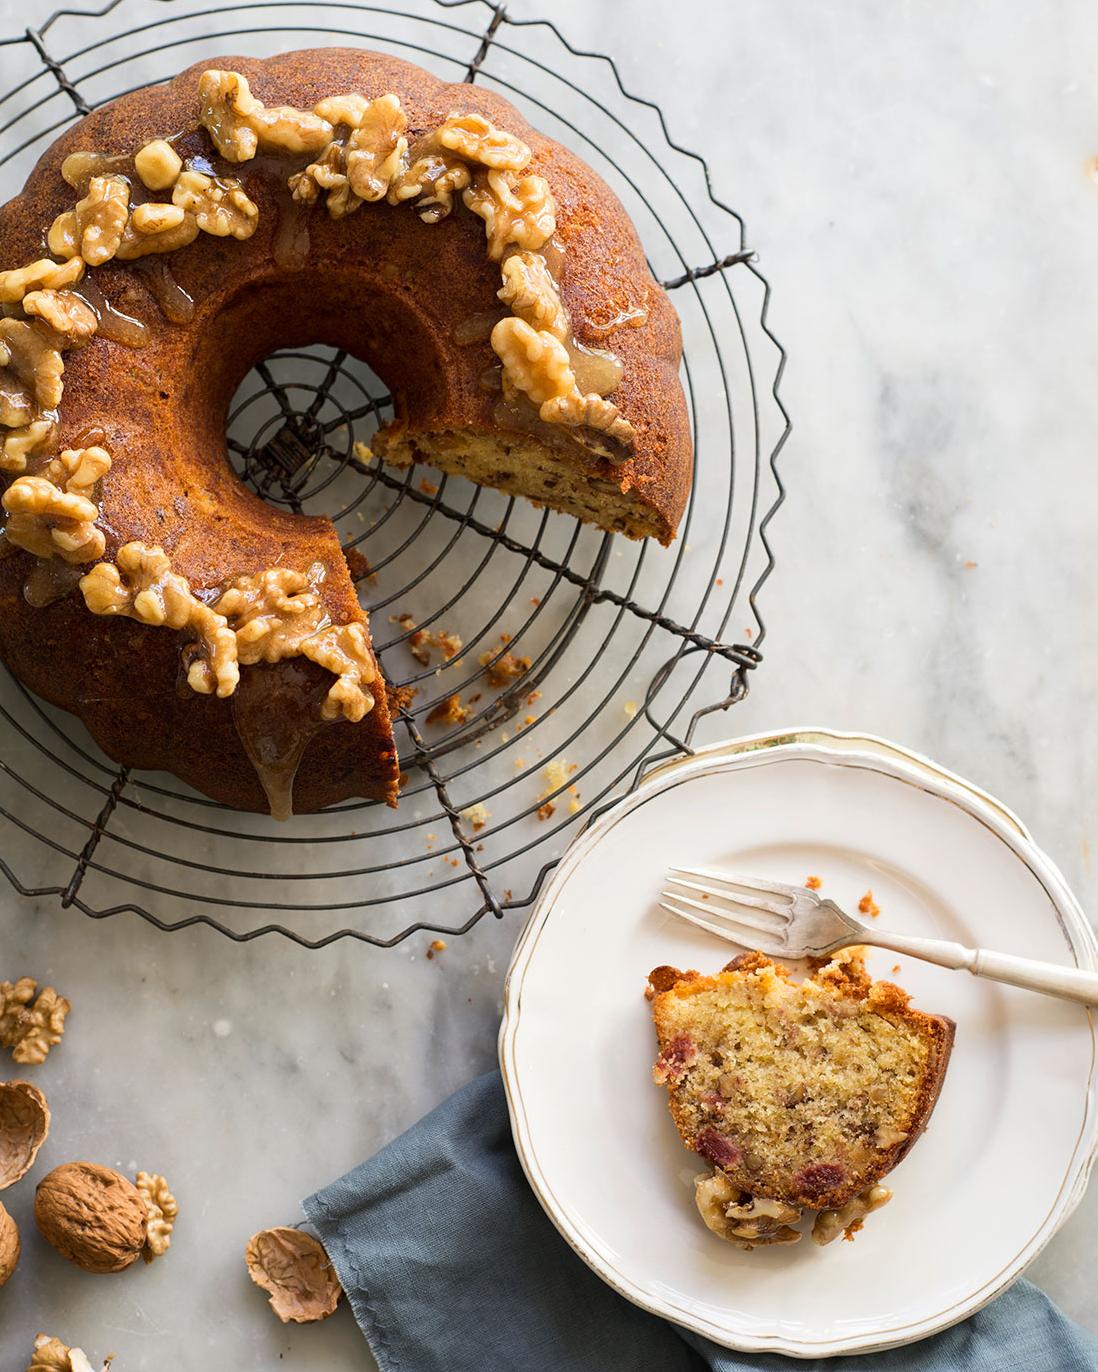  Baking this sensational walnut pound cake will make you the family's favorite dessert maker.